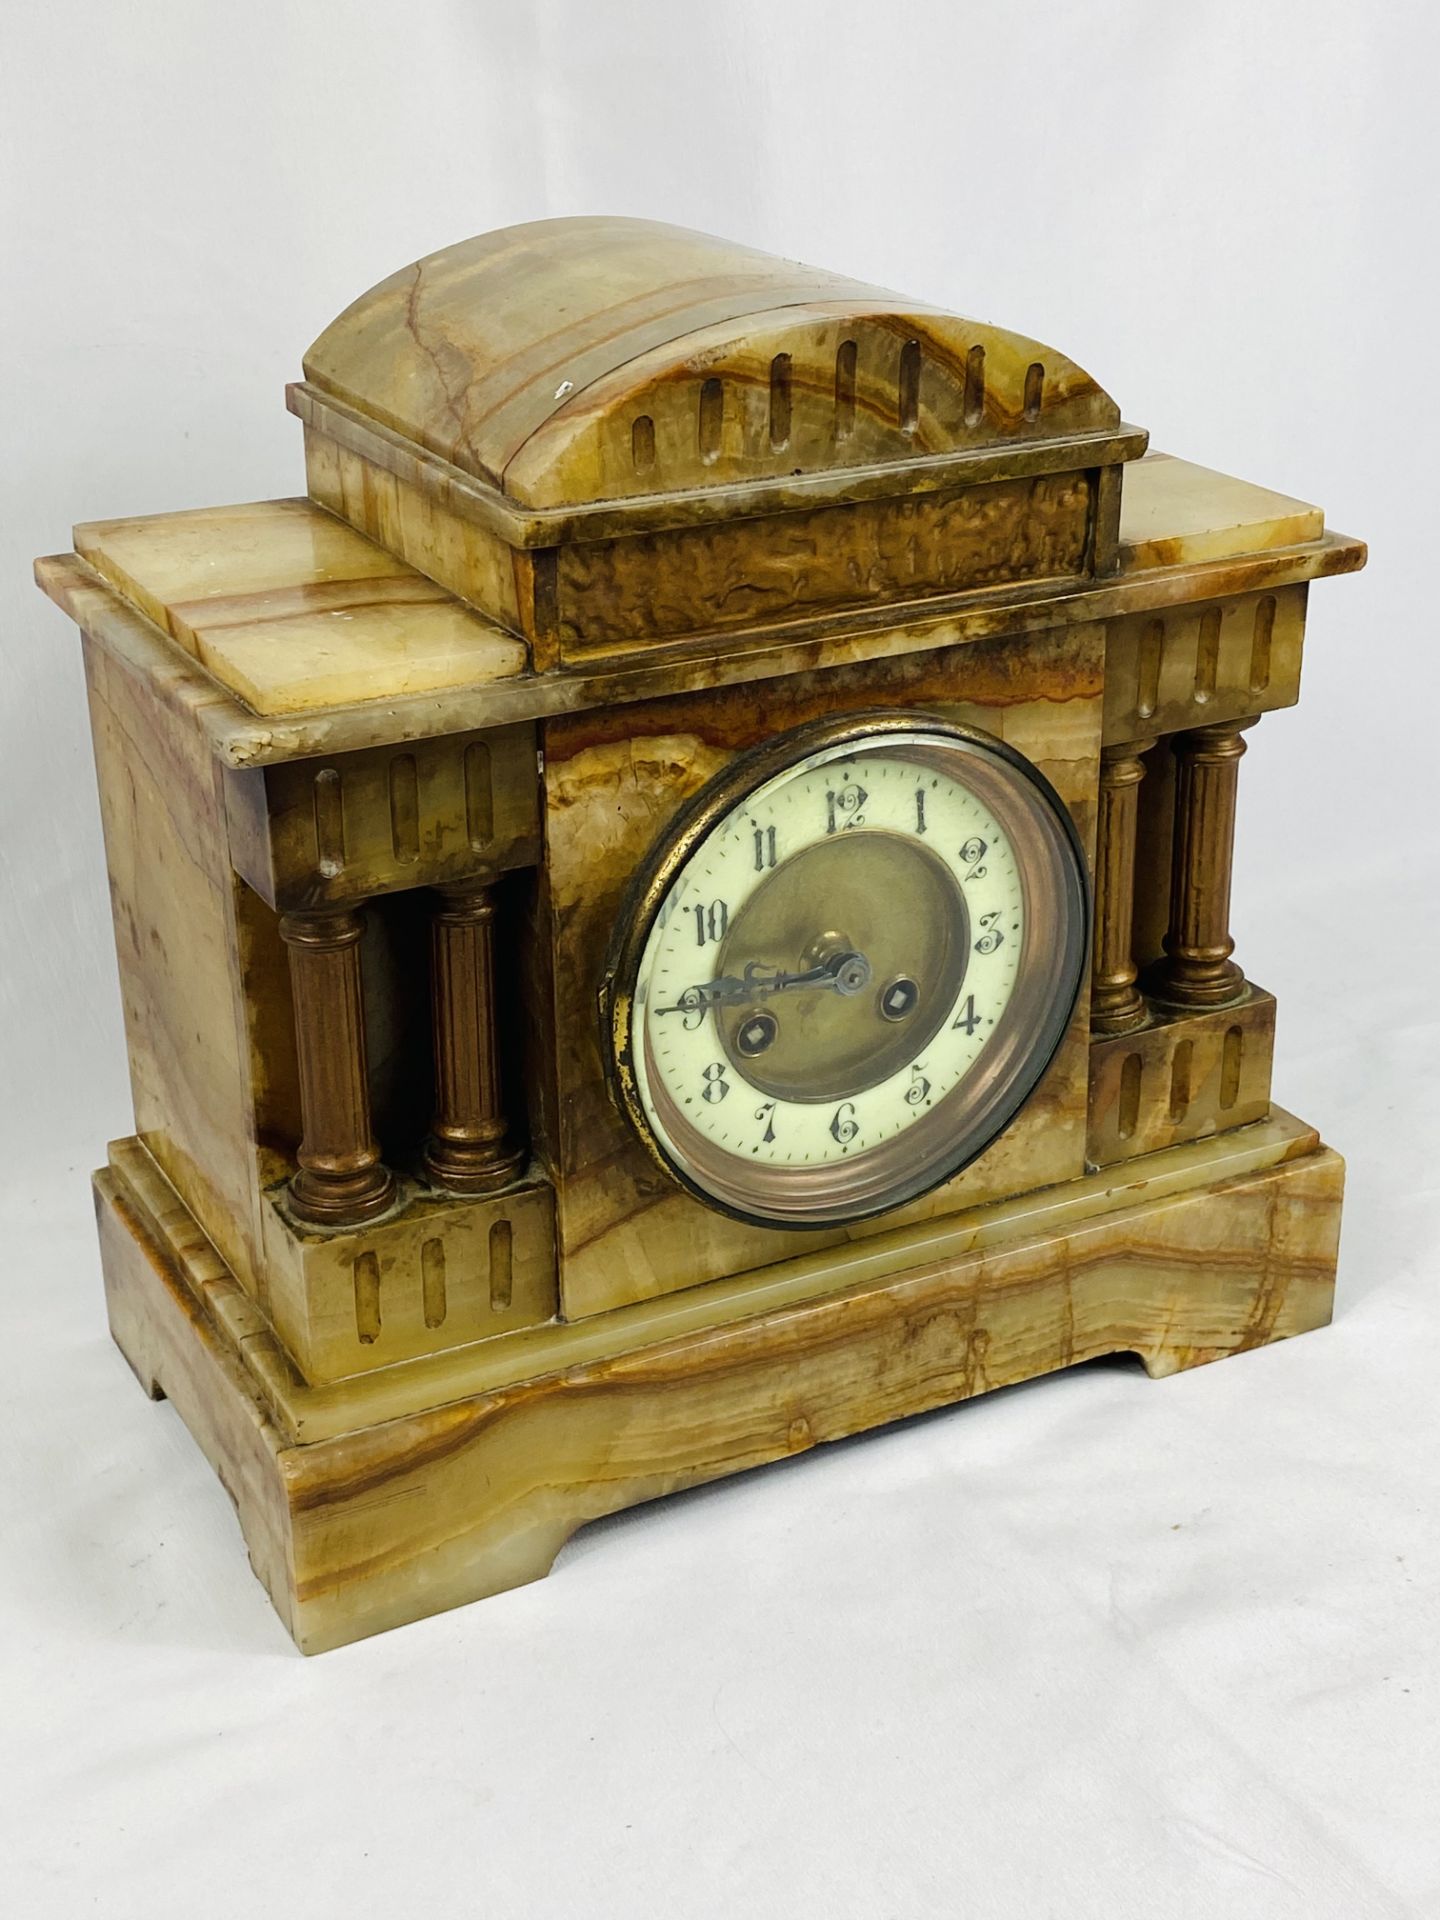 Onyx mantel clock - Image 2 of 4